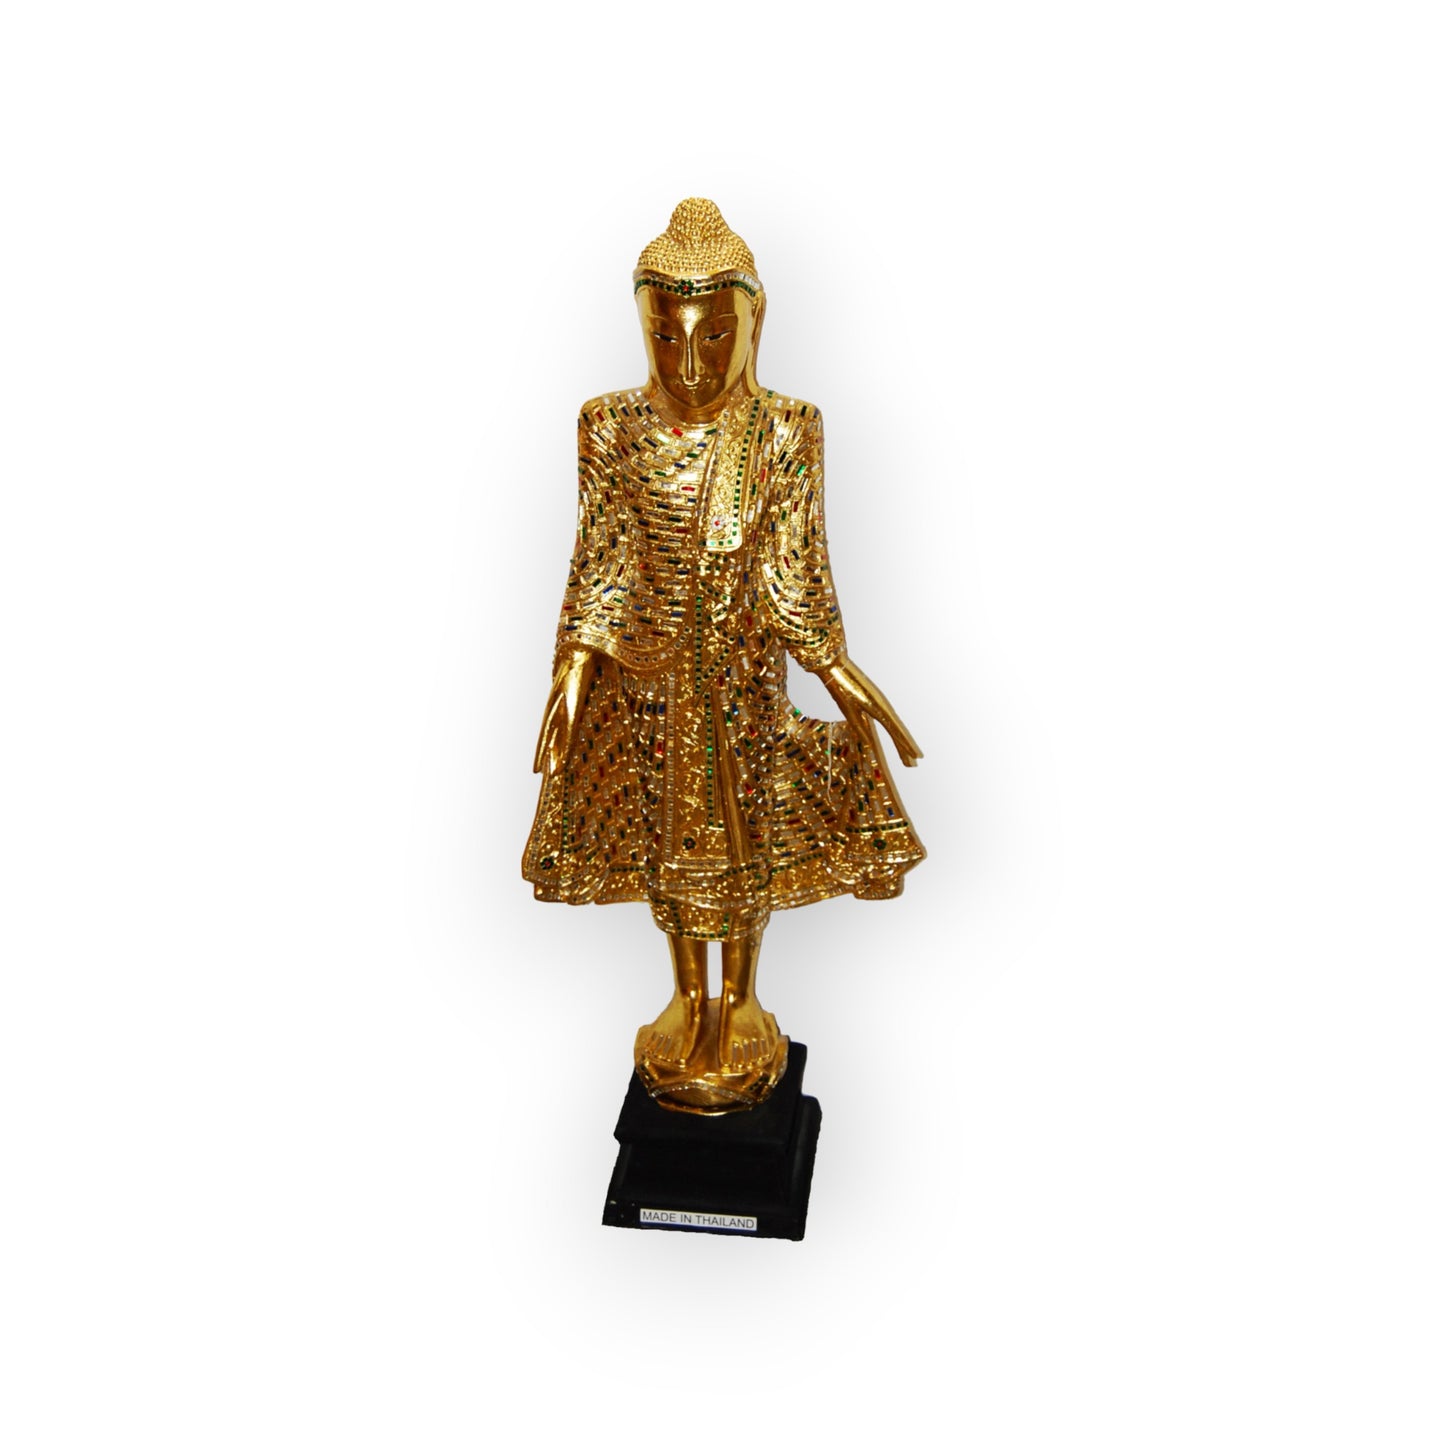 Standing Buddha Statue Gold Leaf 46" Tall